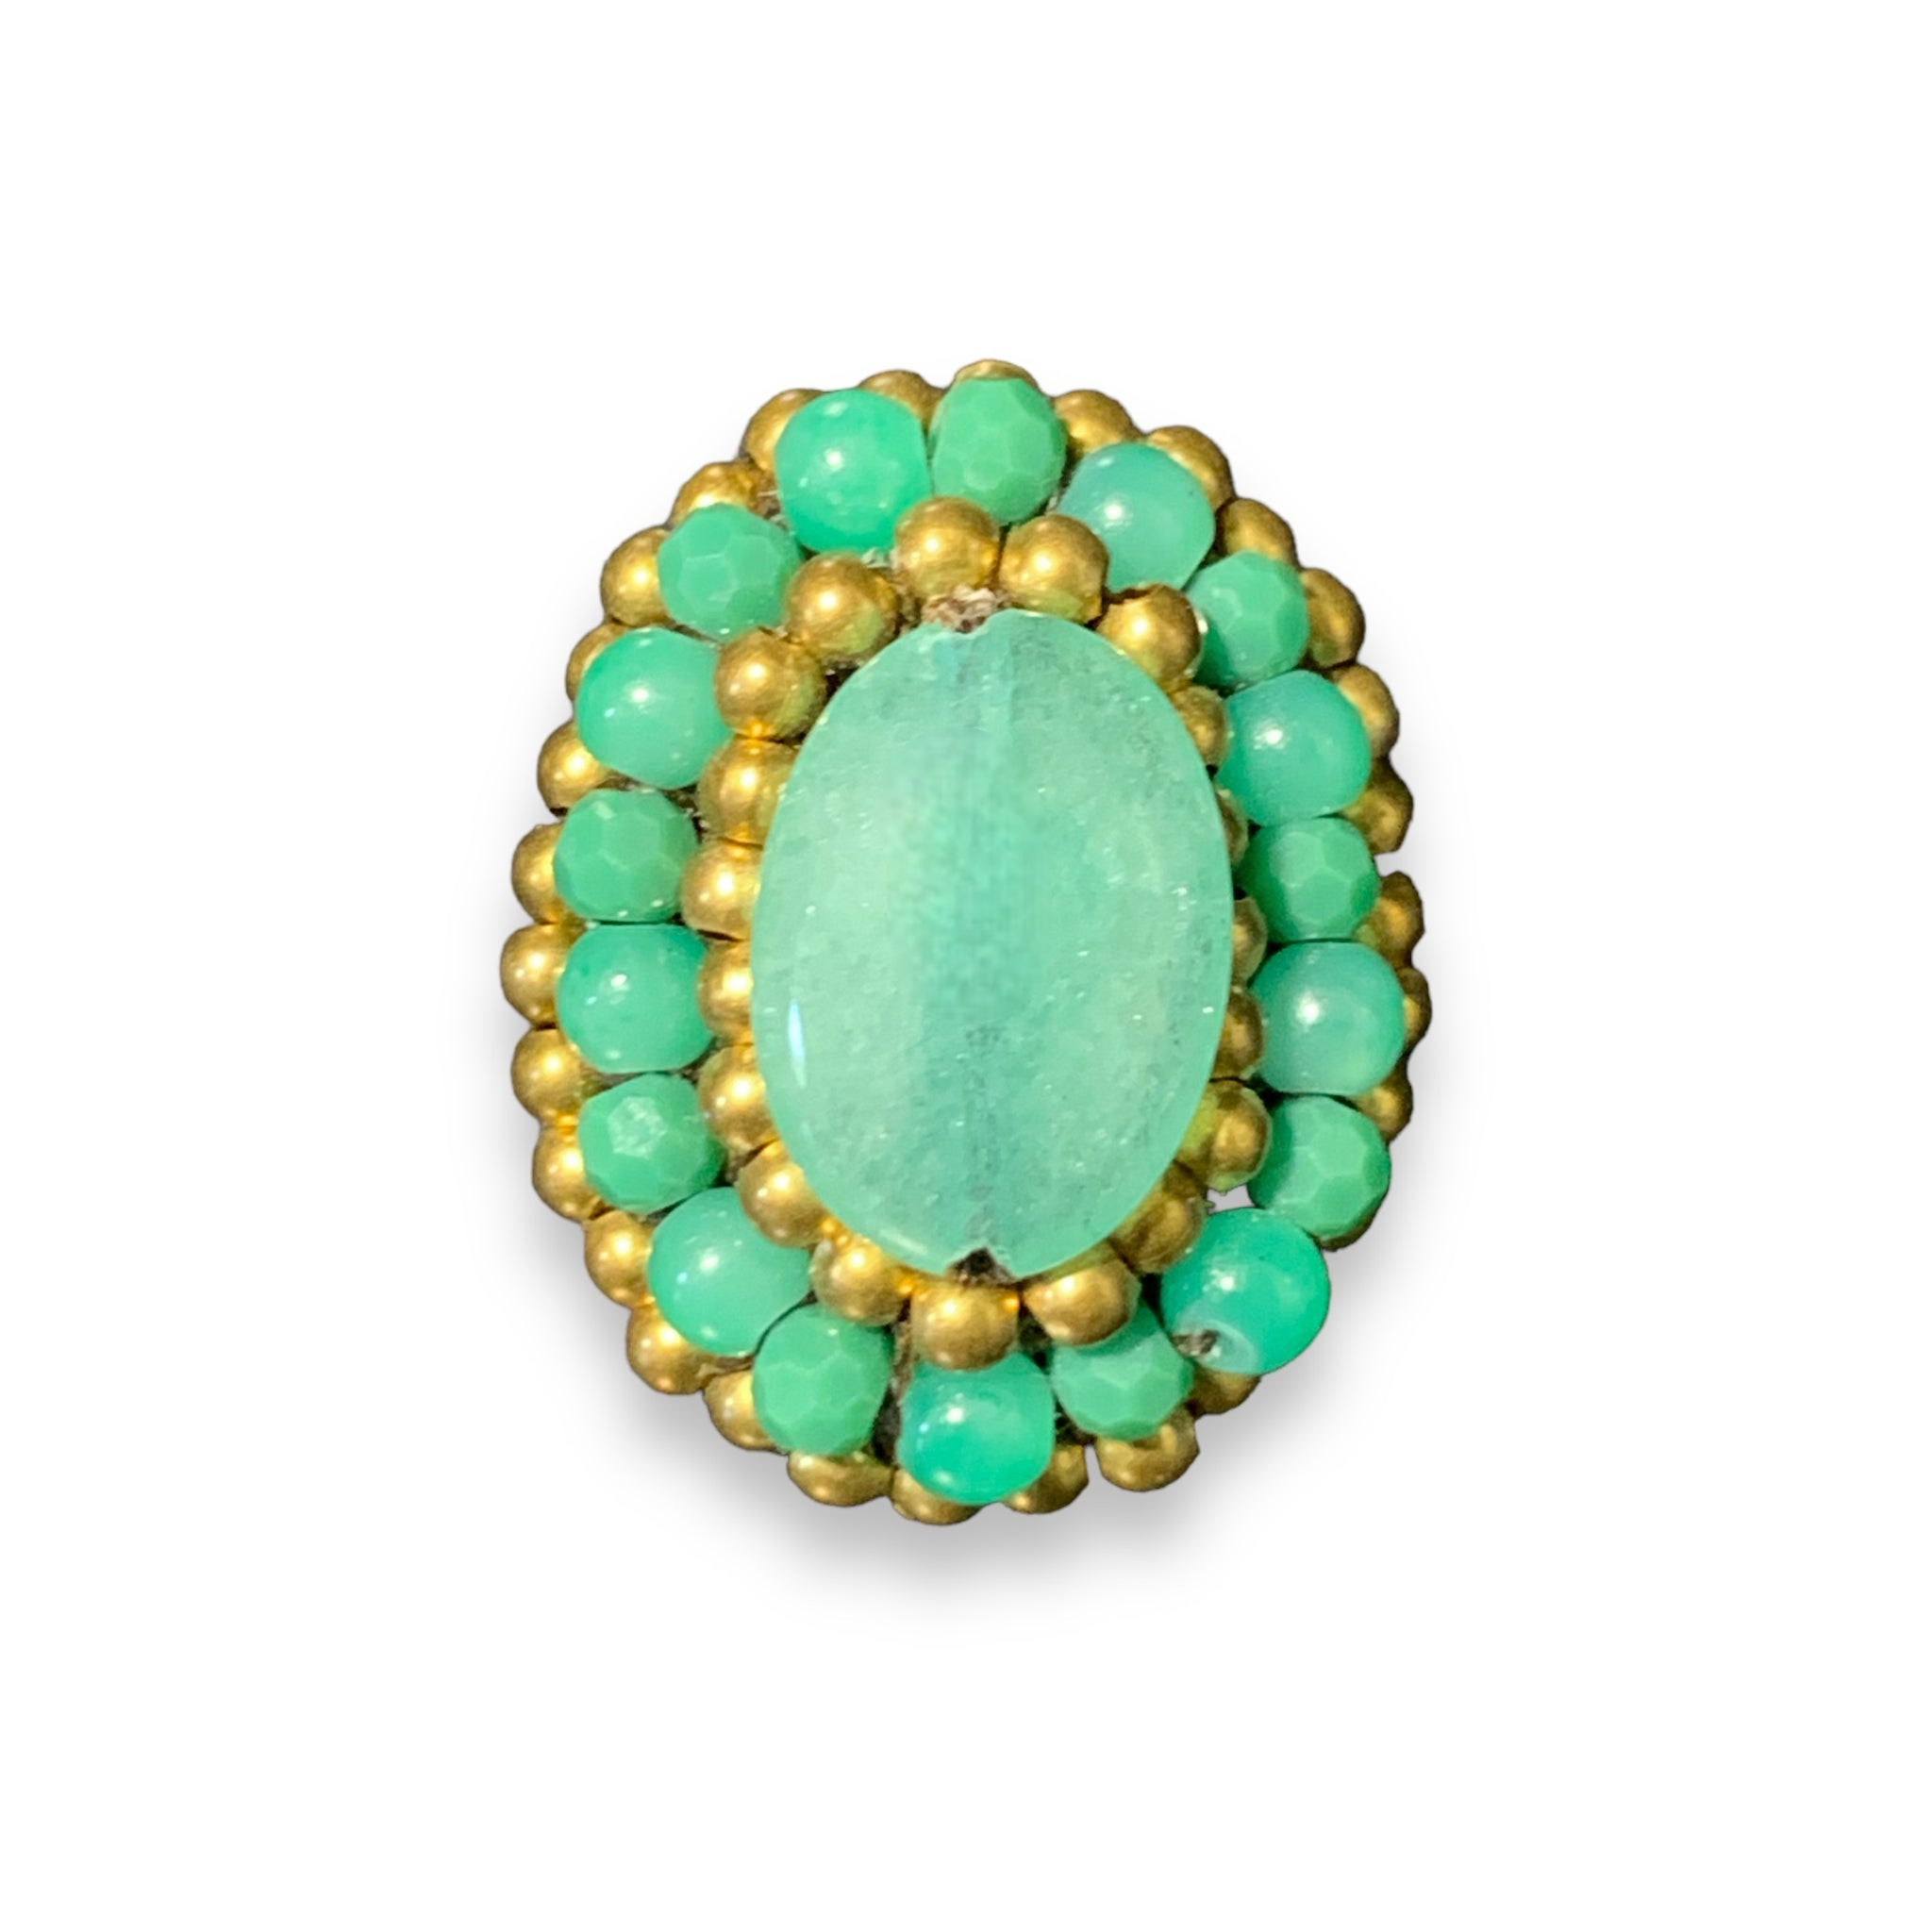 Handmade Ring Green Bead Oval Gemstone Woven Wax Cord Adjustable Jewelry